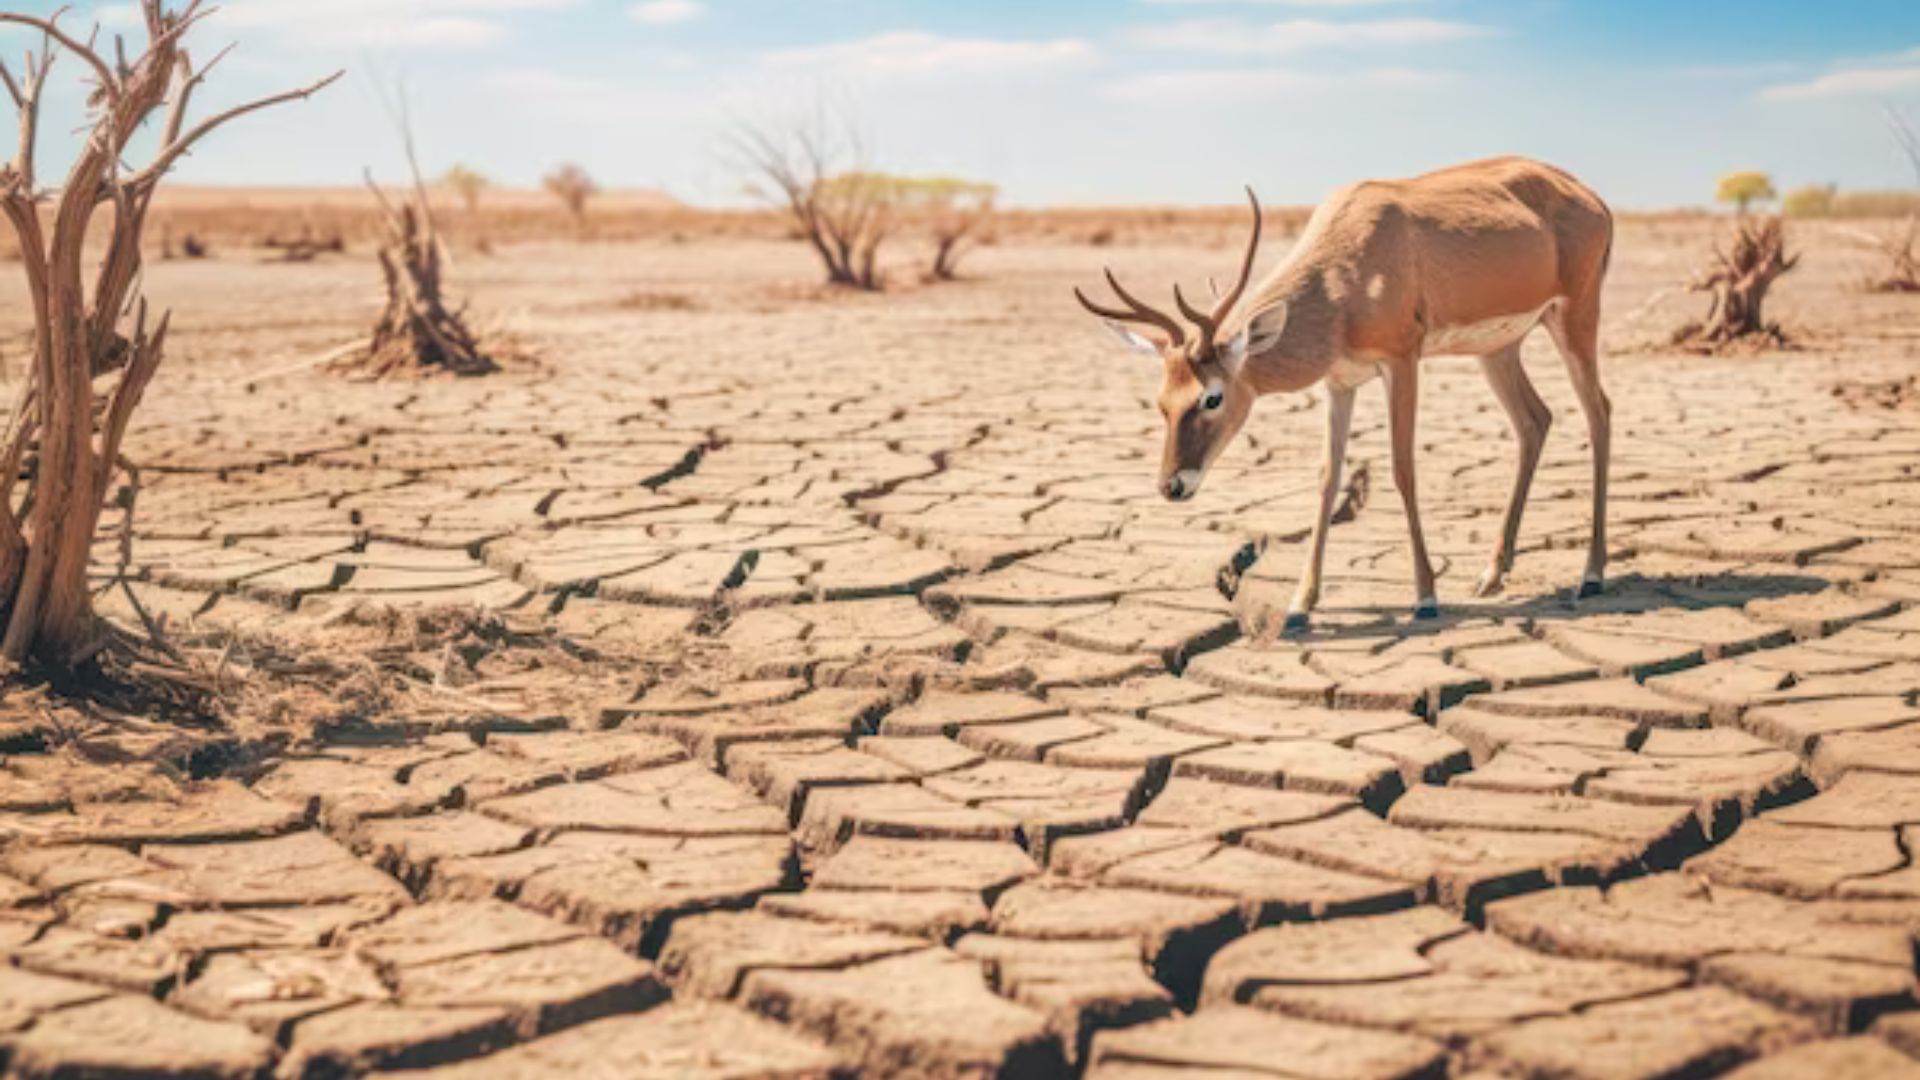 An Impala Grazing on Dry Land